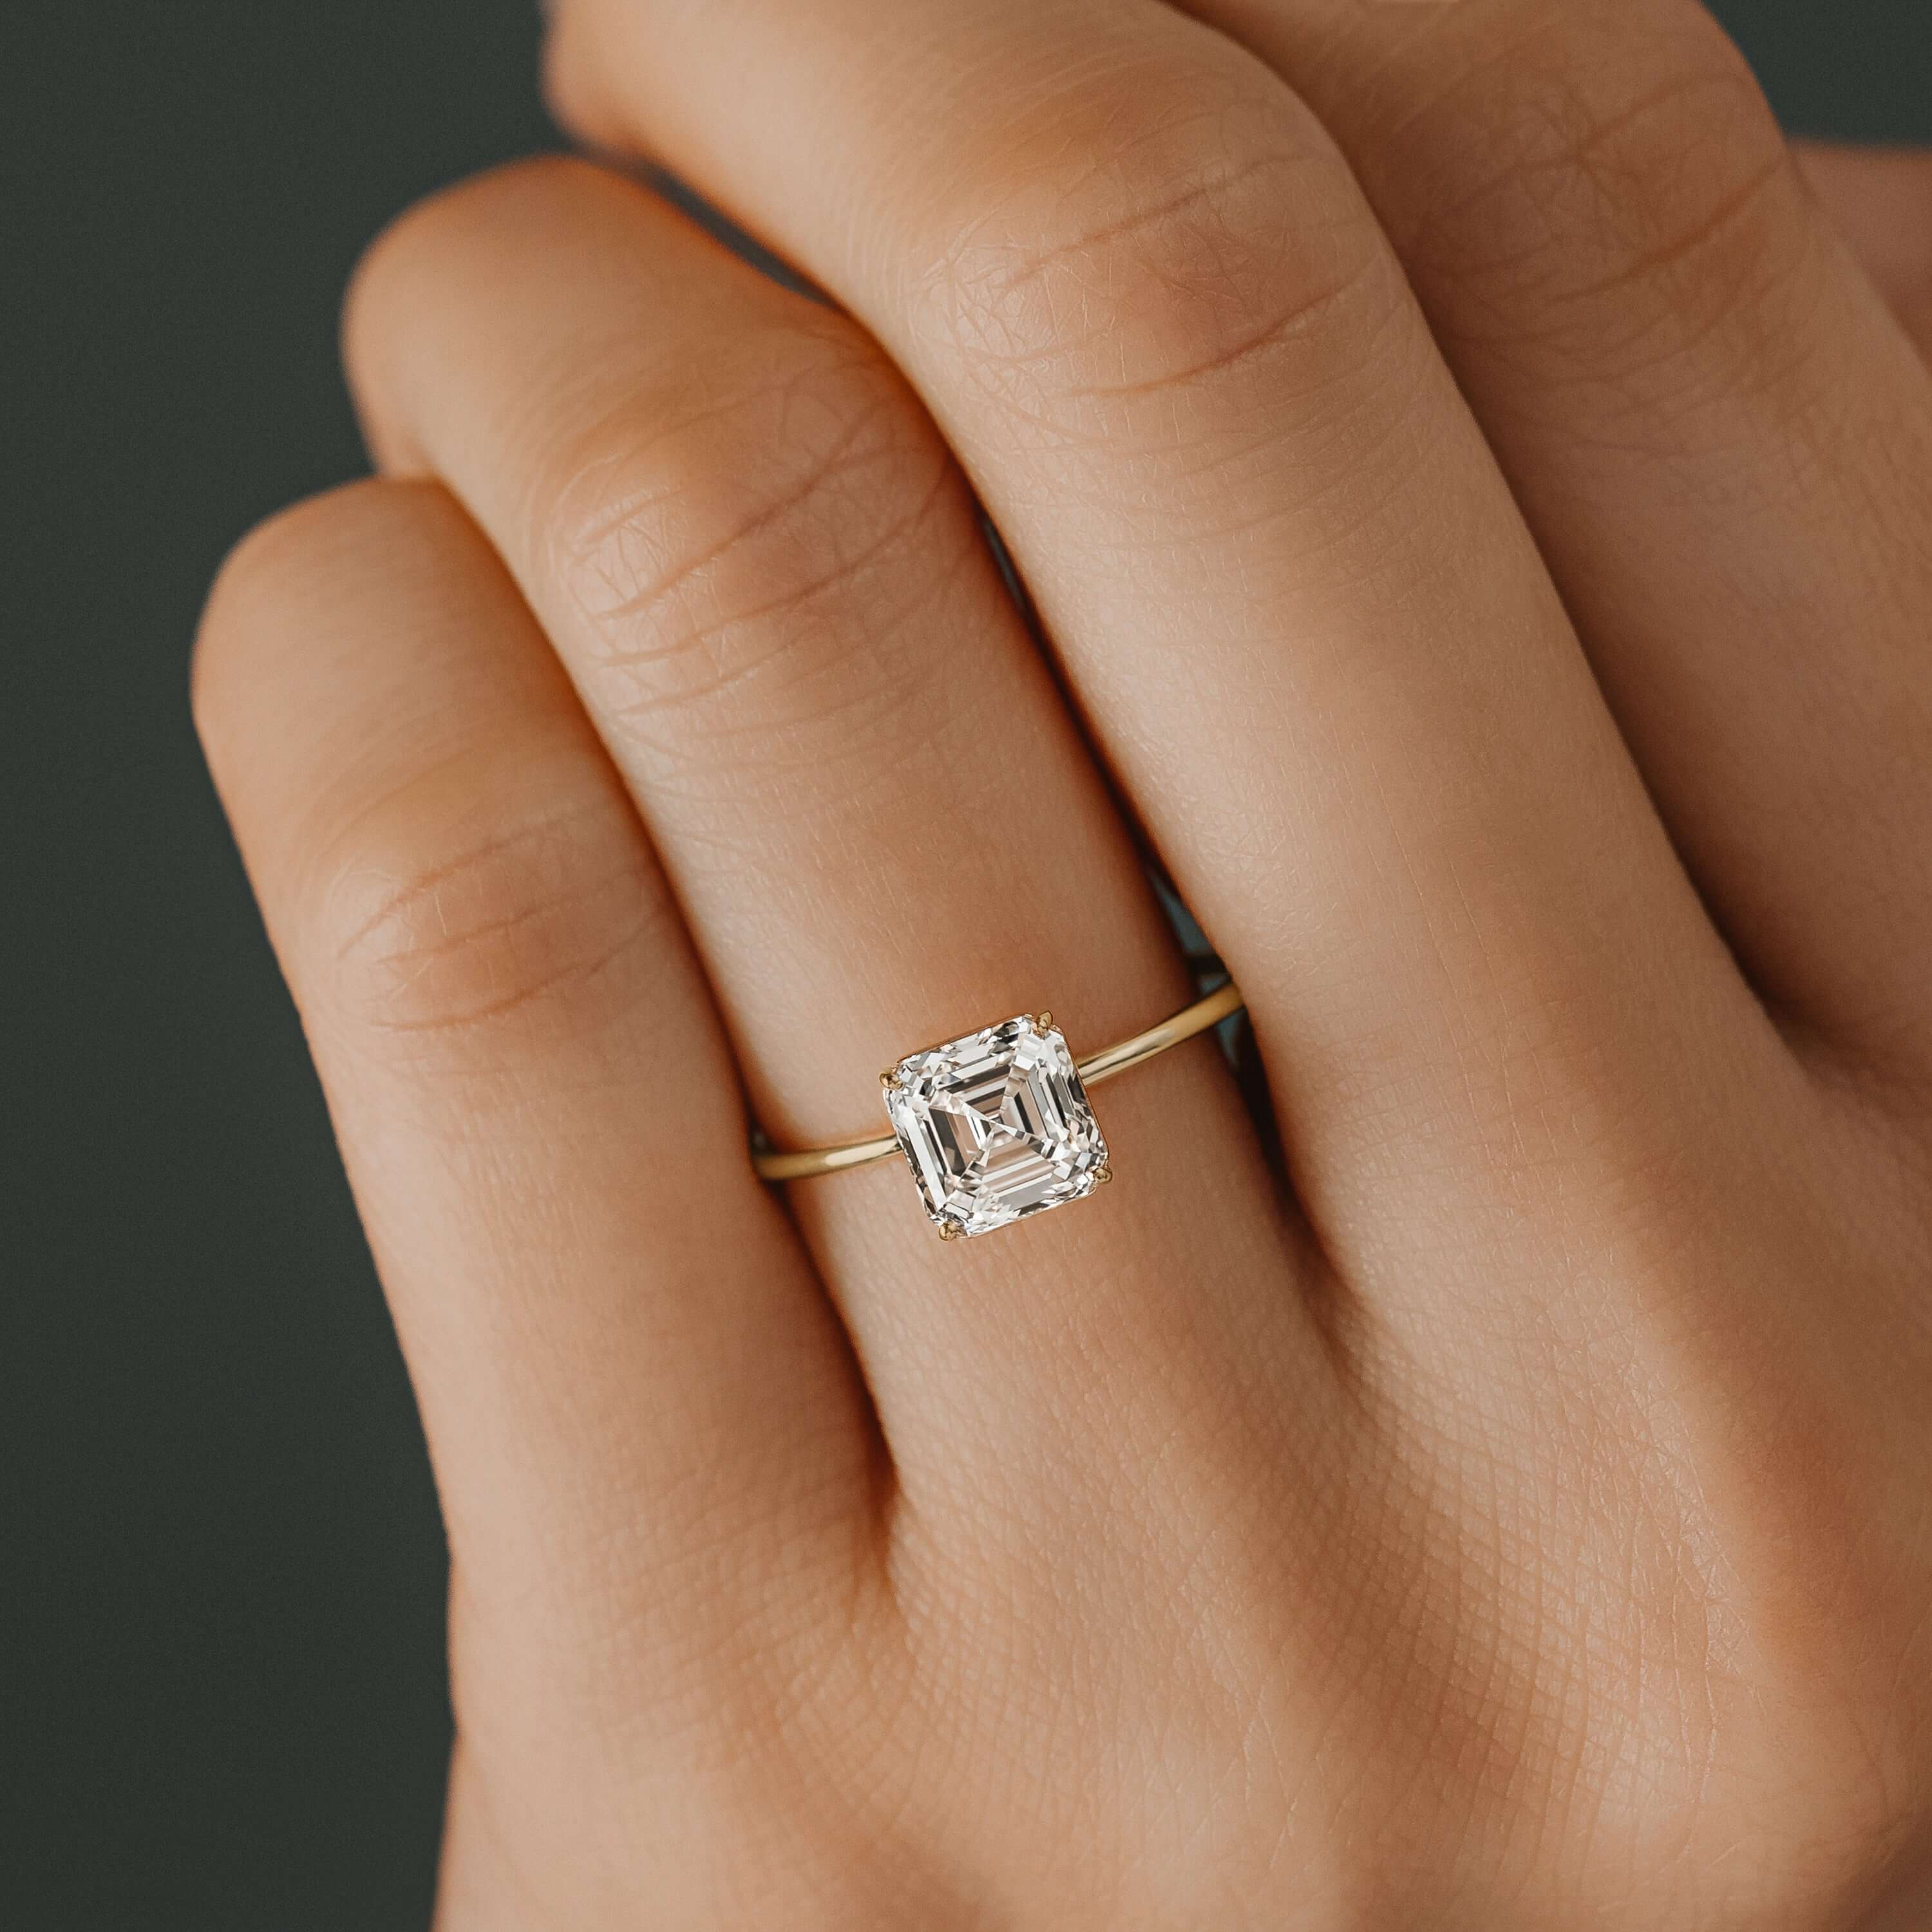 Exceptional Asscher Cut Solitaire Diamond Ring 14K White Gold 2.01Ct G/VS2